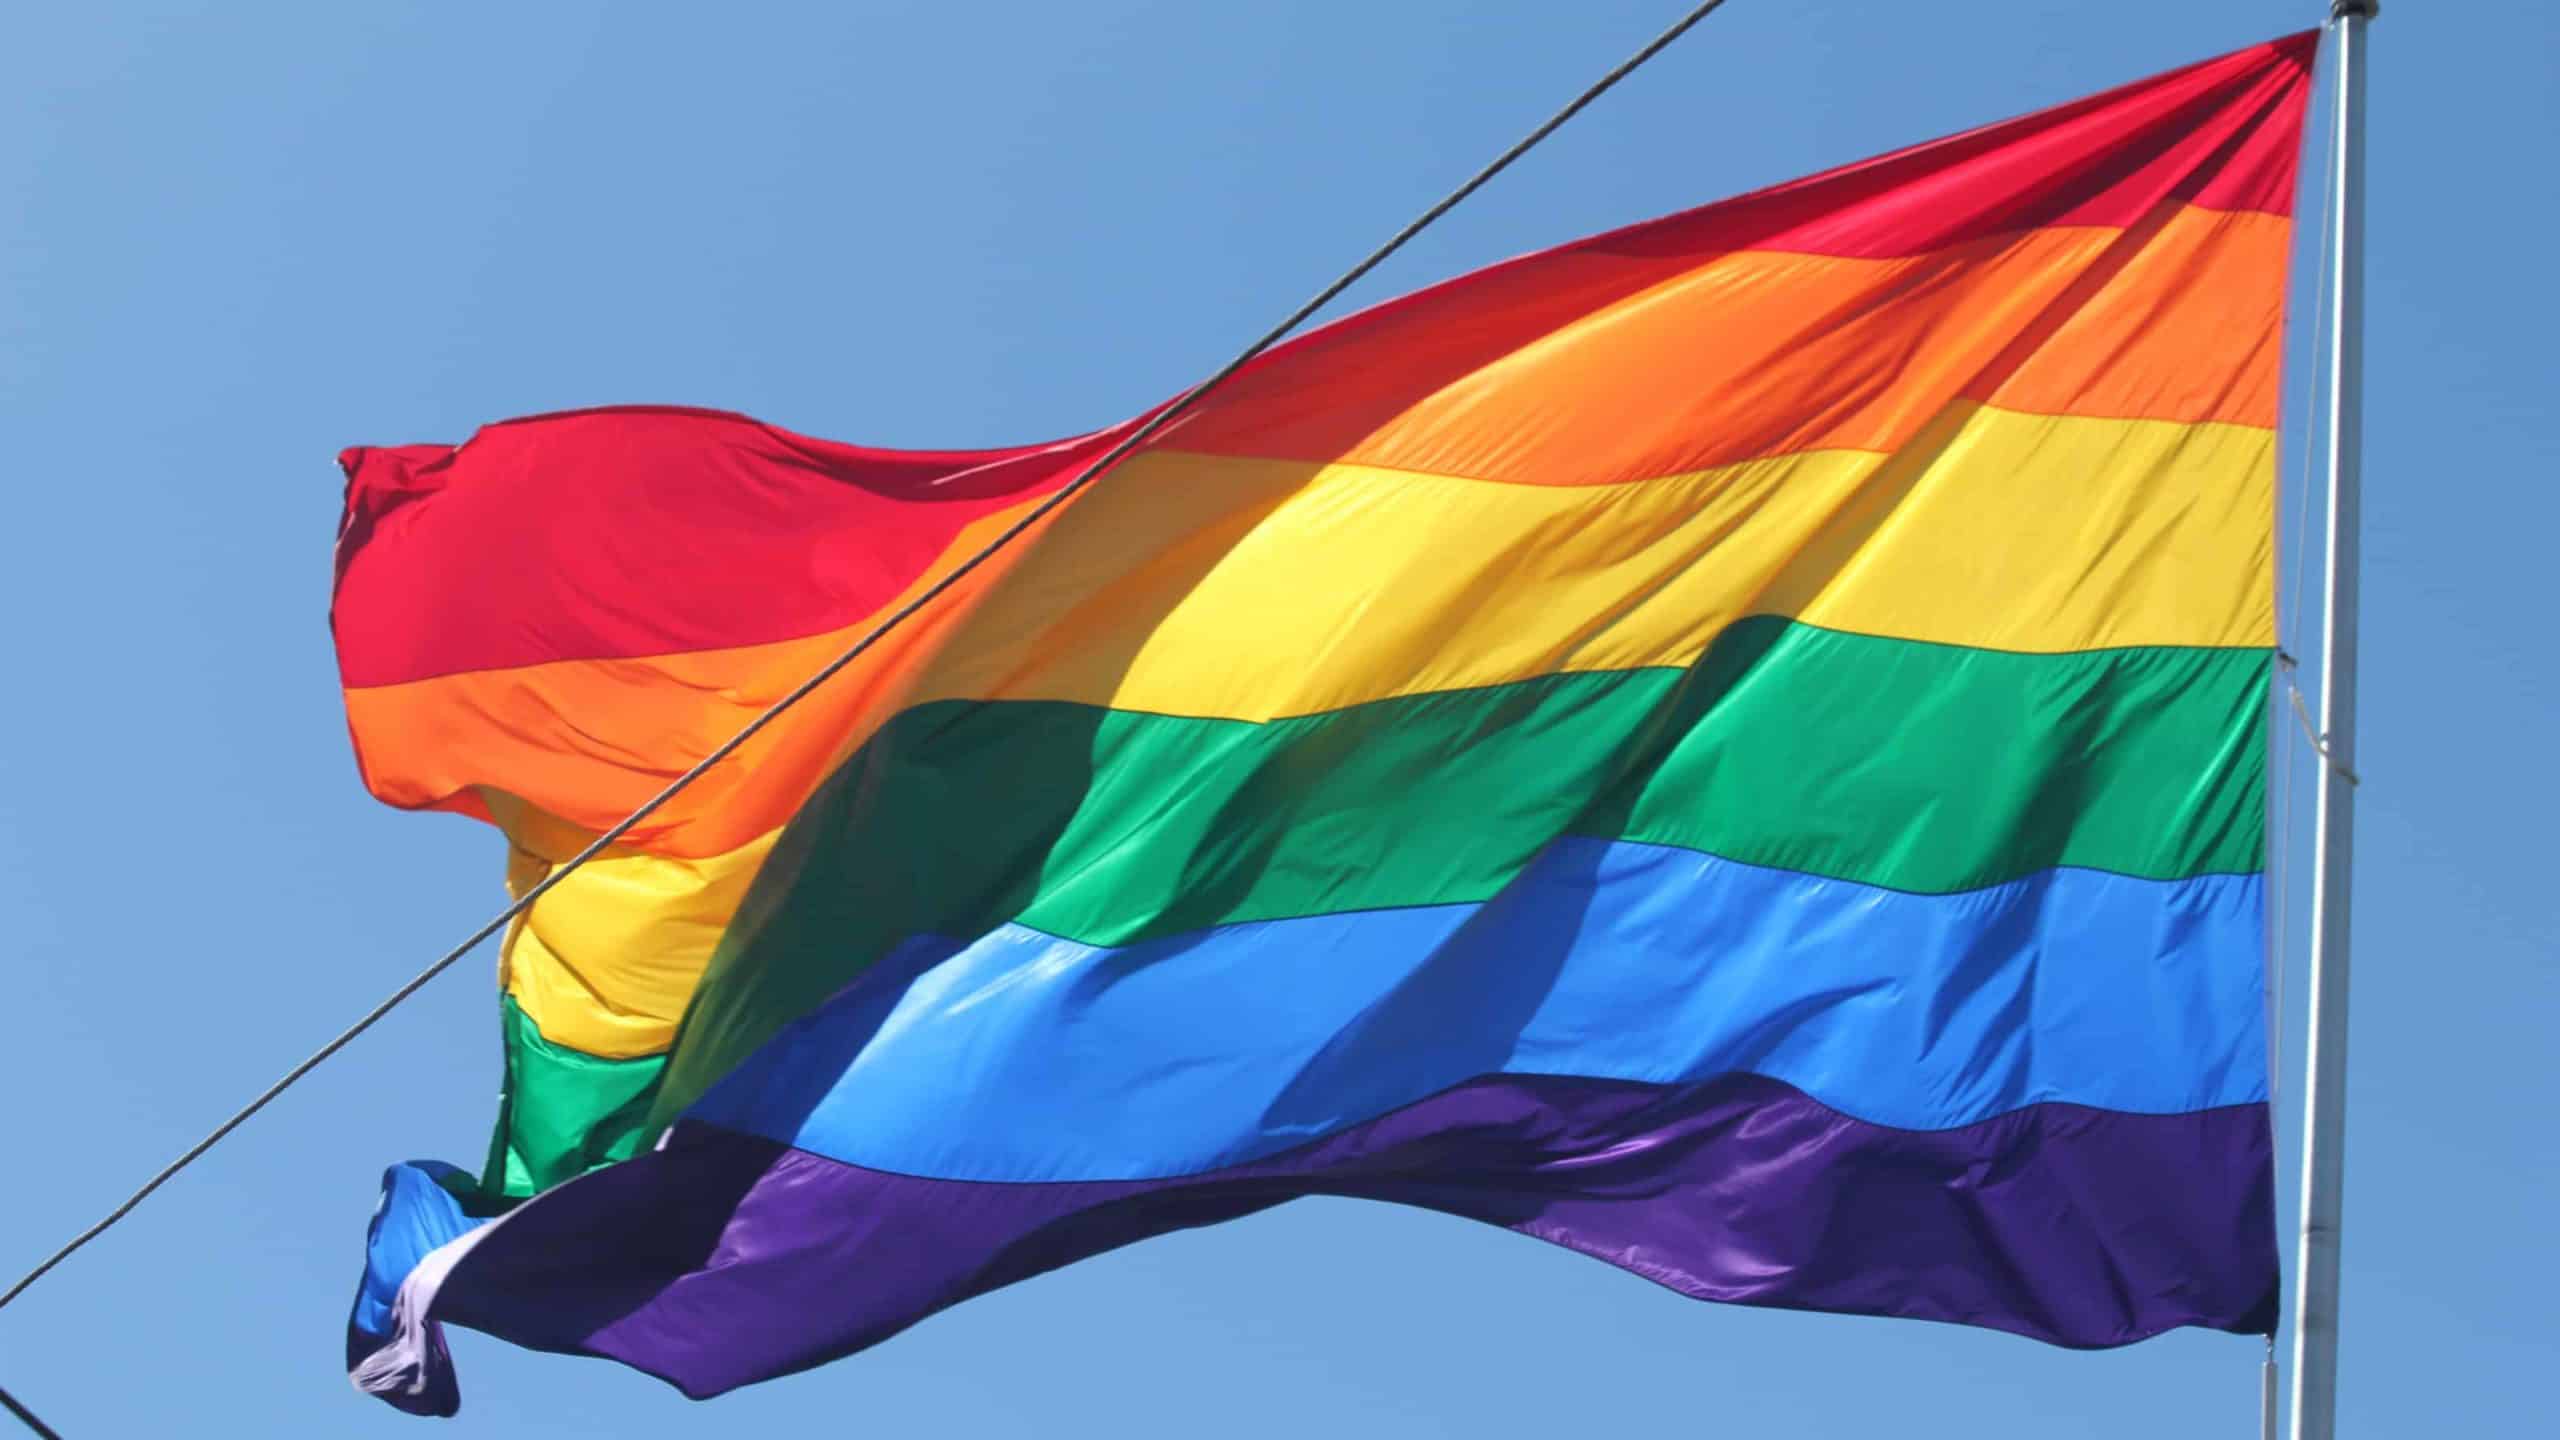 An LGBTQA Pride flag flies in a clear blue sky.